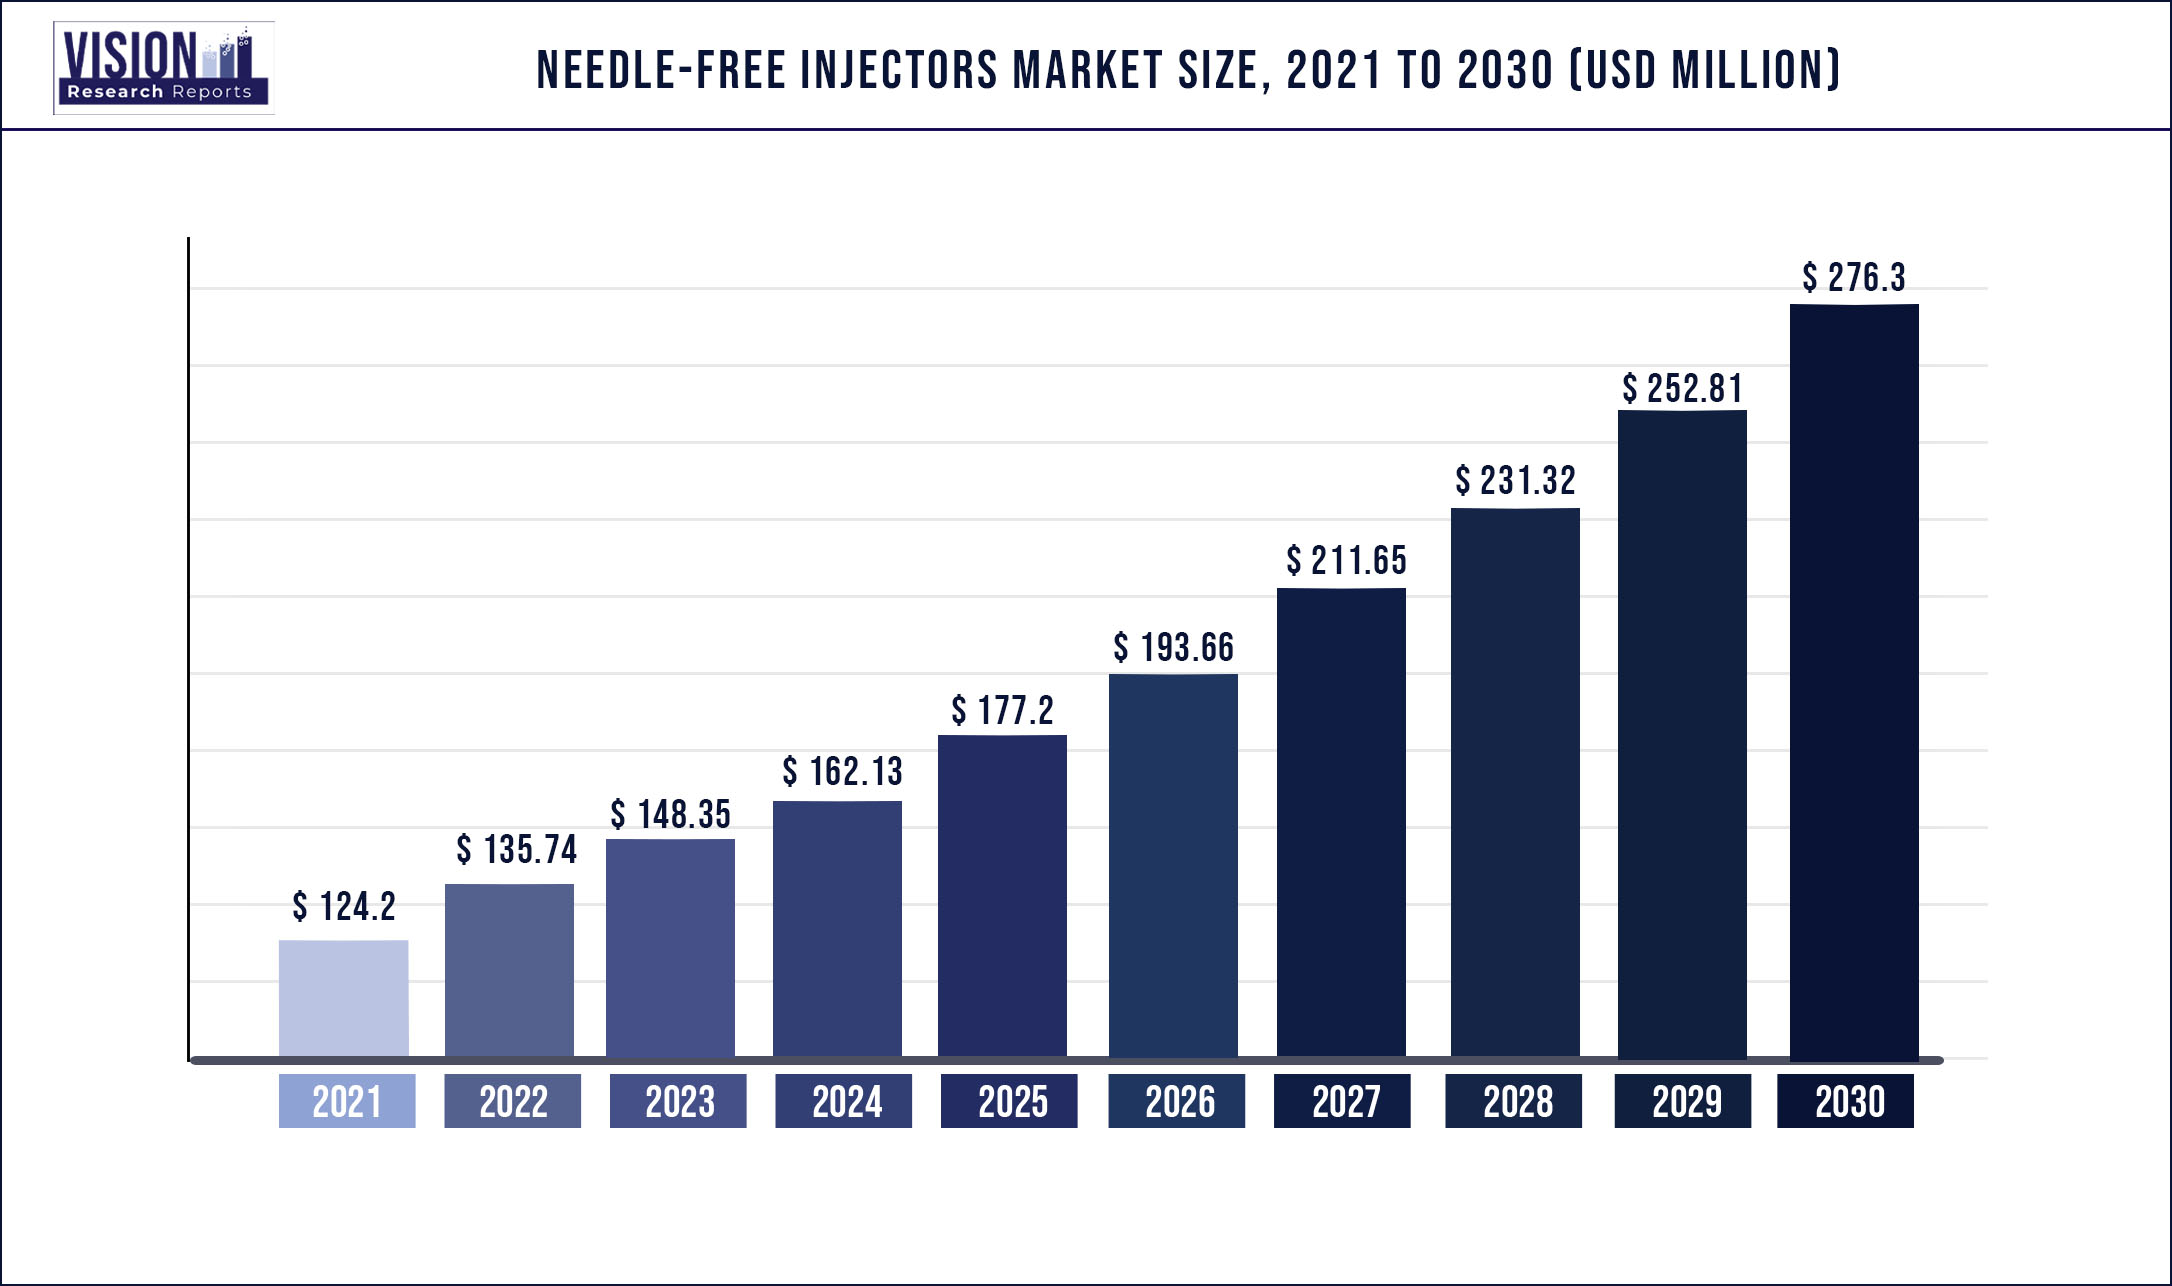 Needle-free Injectors Market Size 2021 to 2030